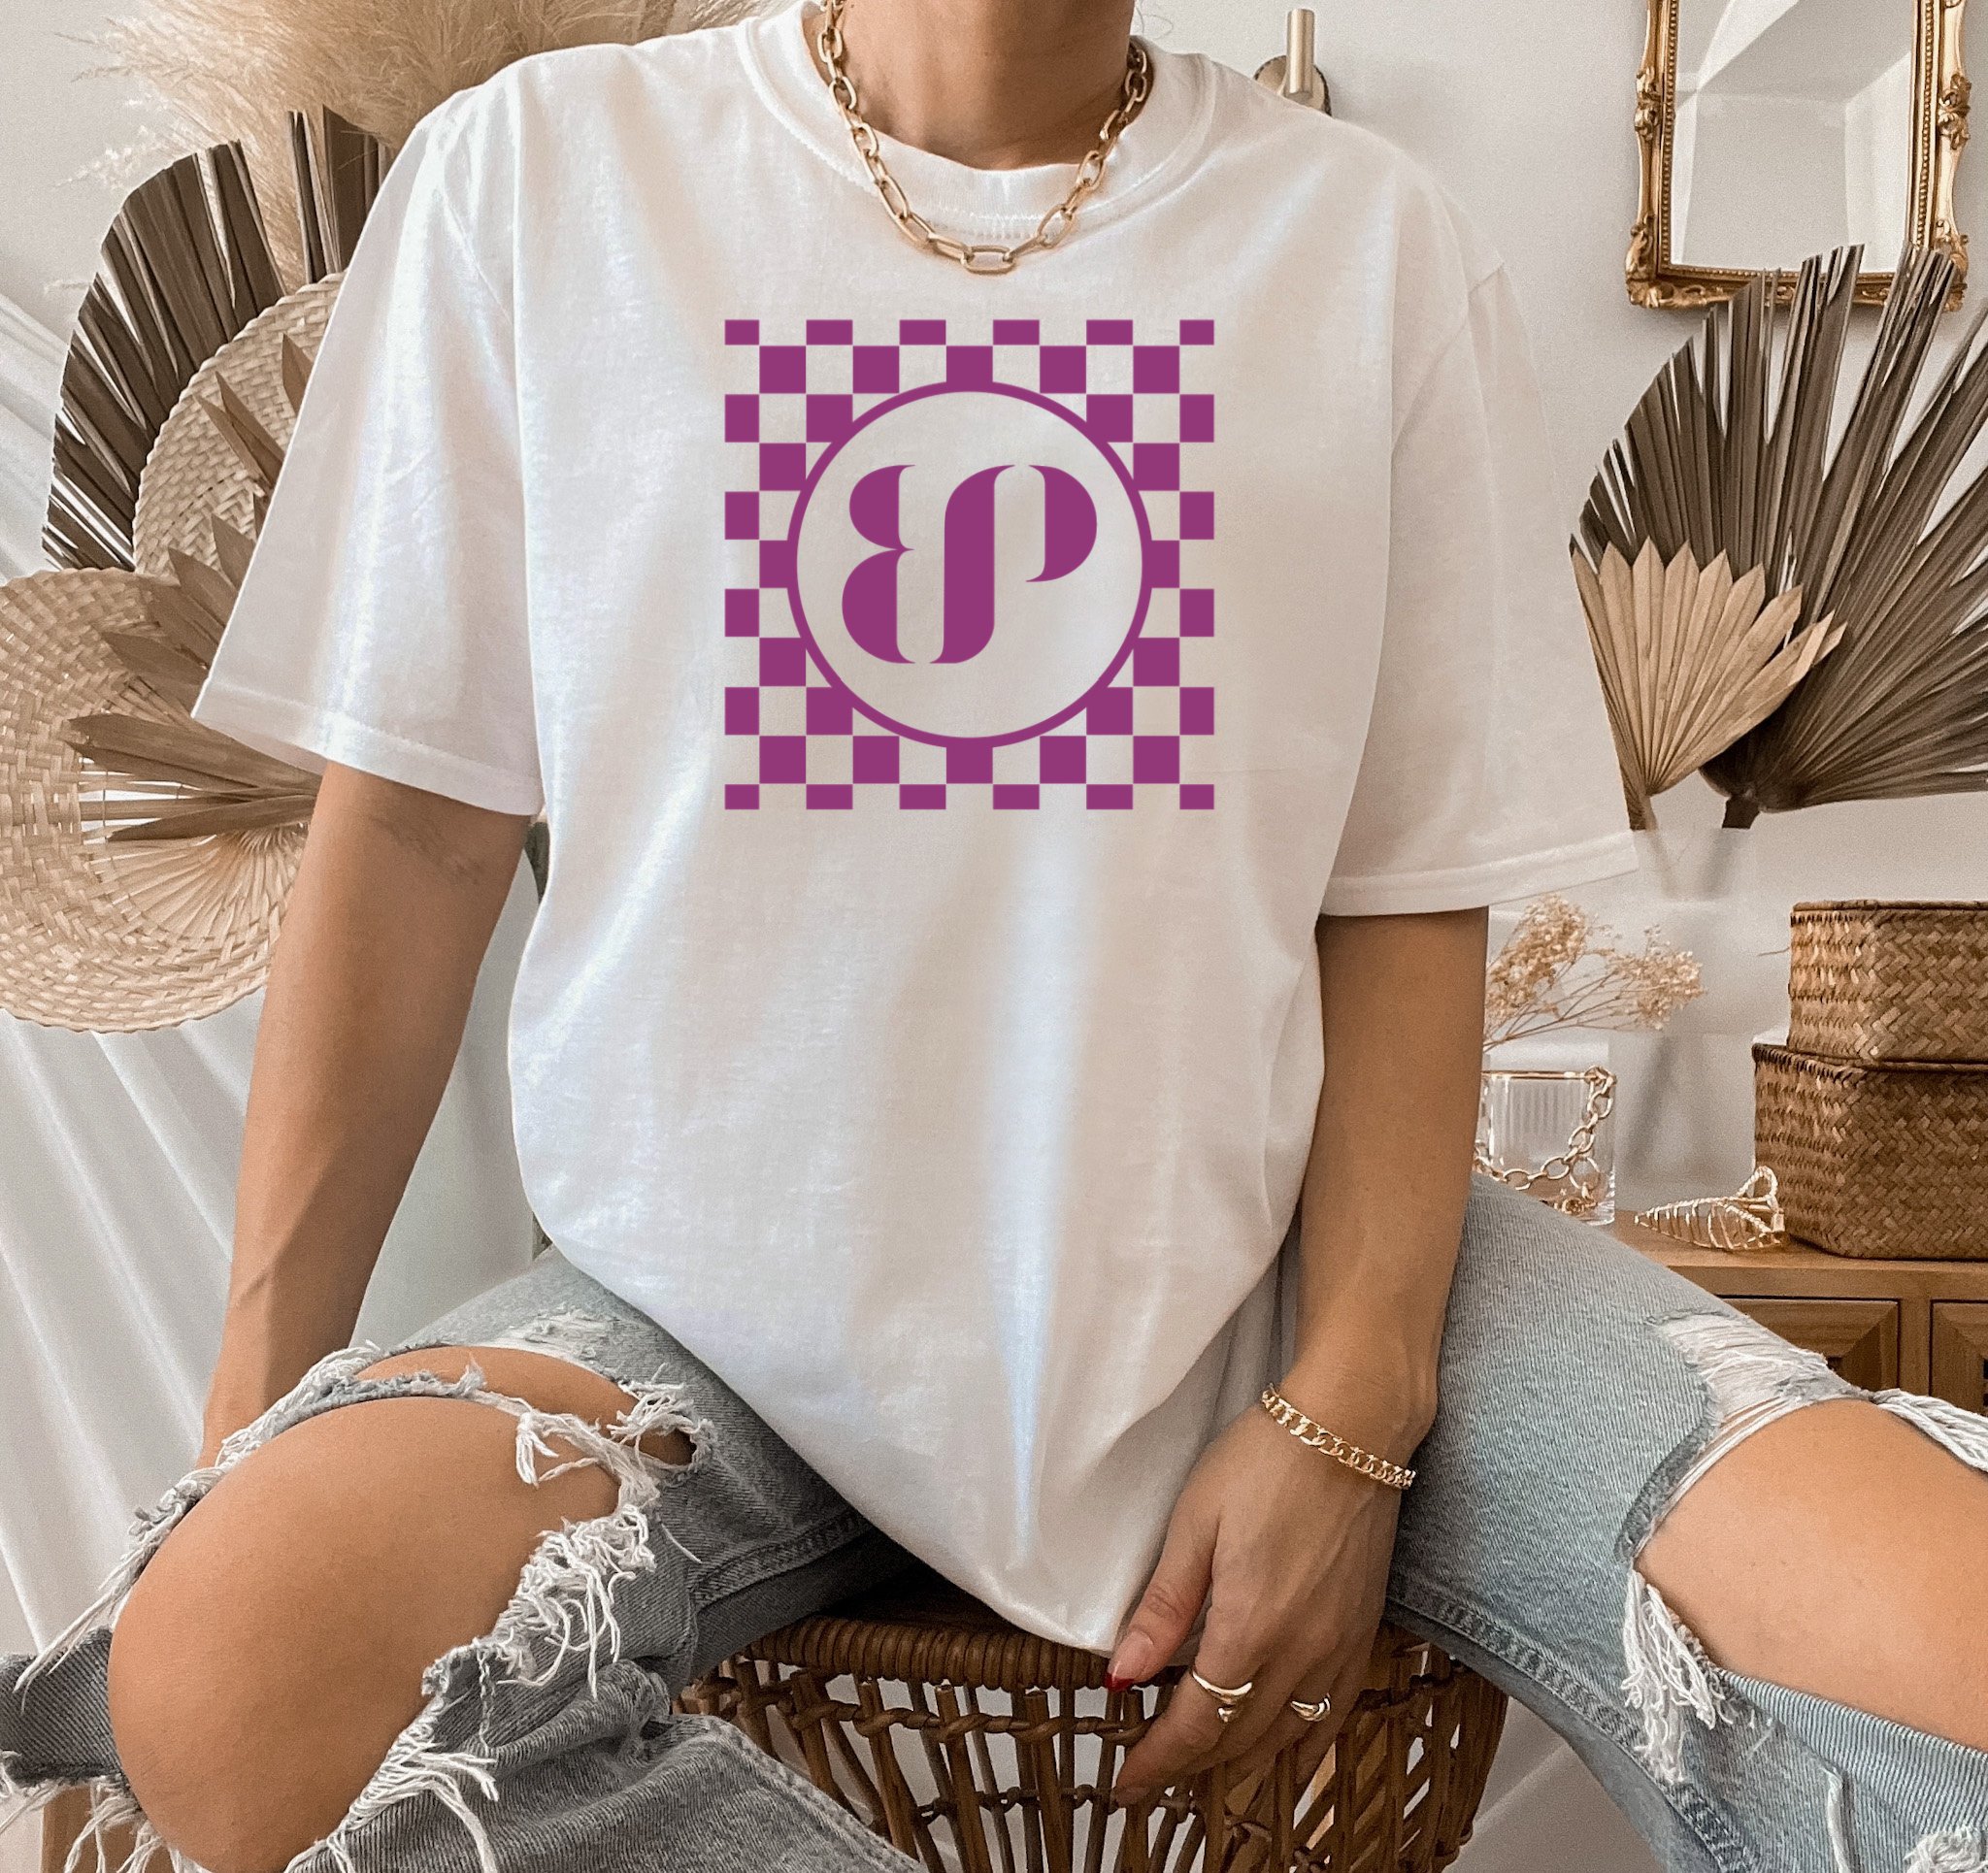 Image for BP Checkered White Tee or Sweatshirt